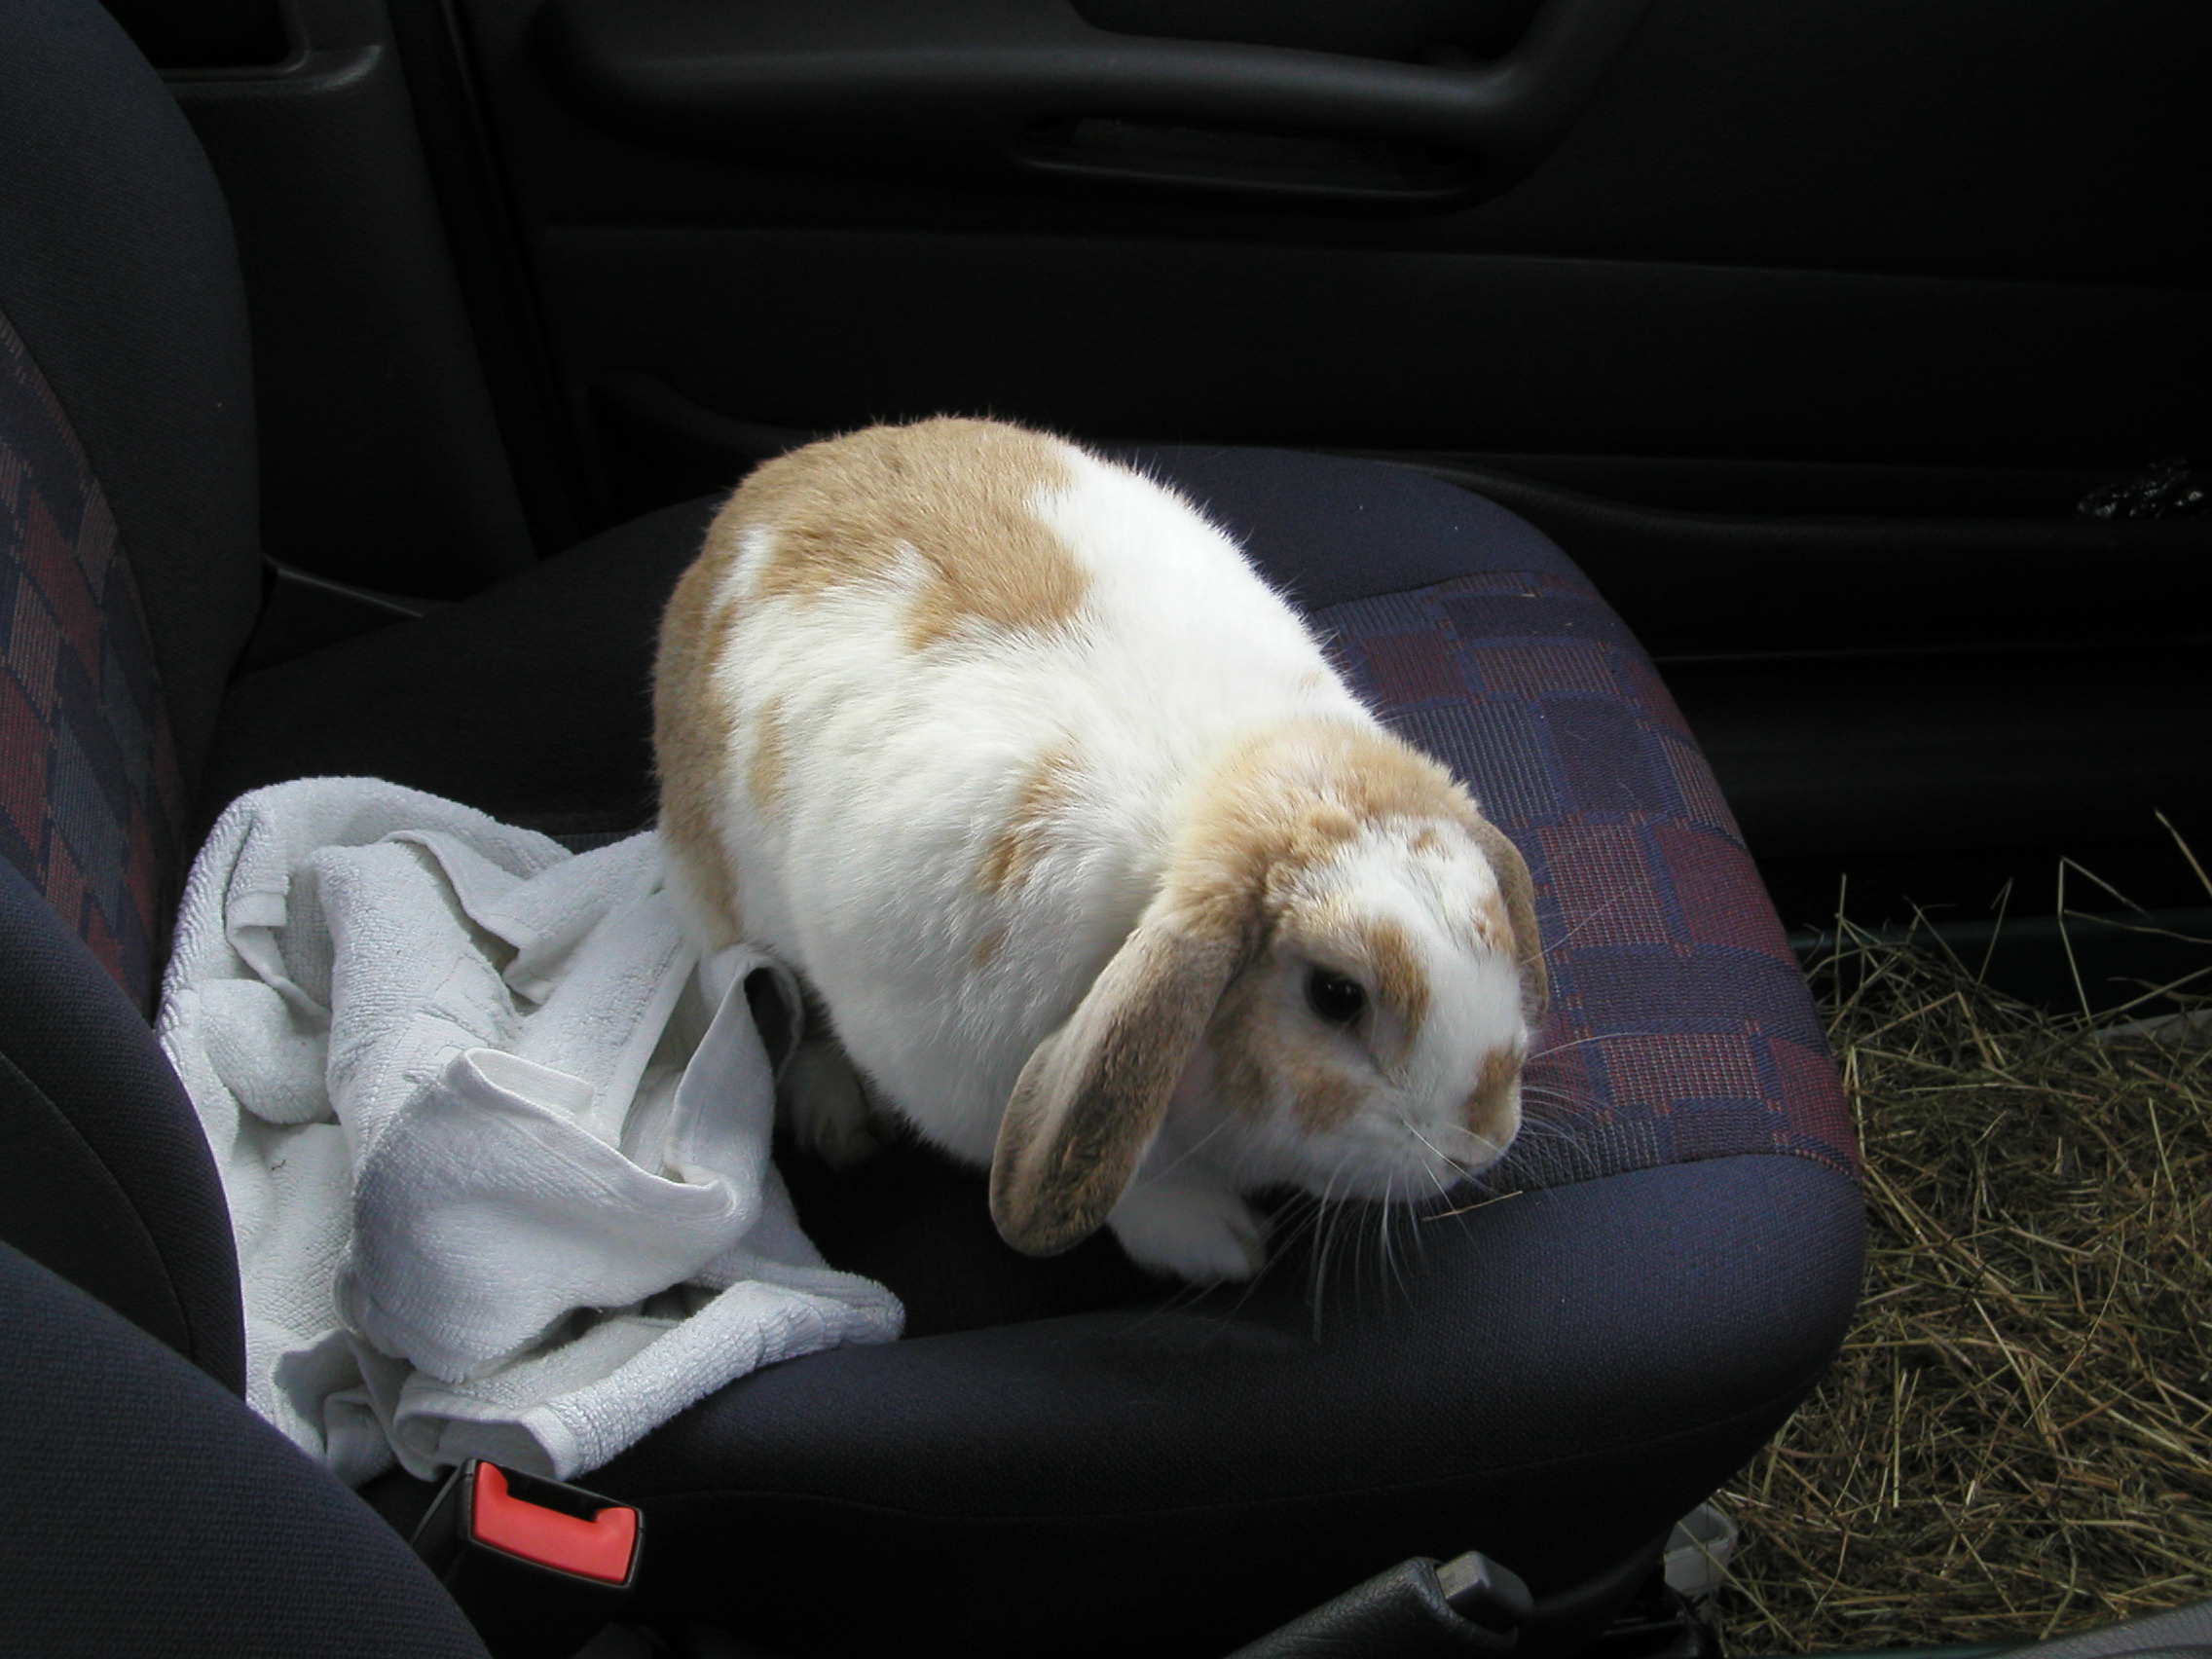 Binki in Dave's car :D